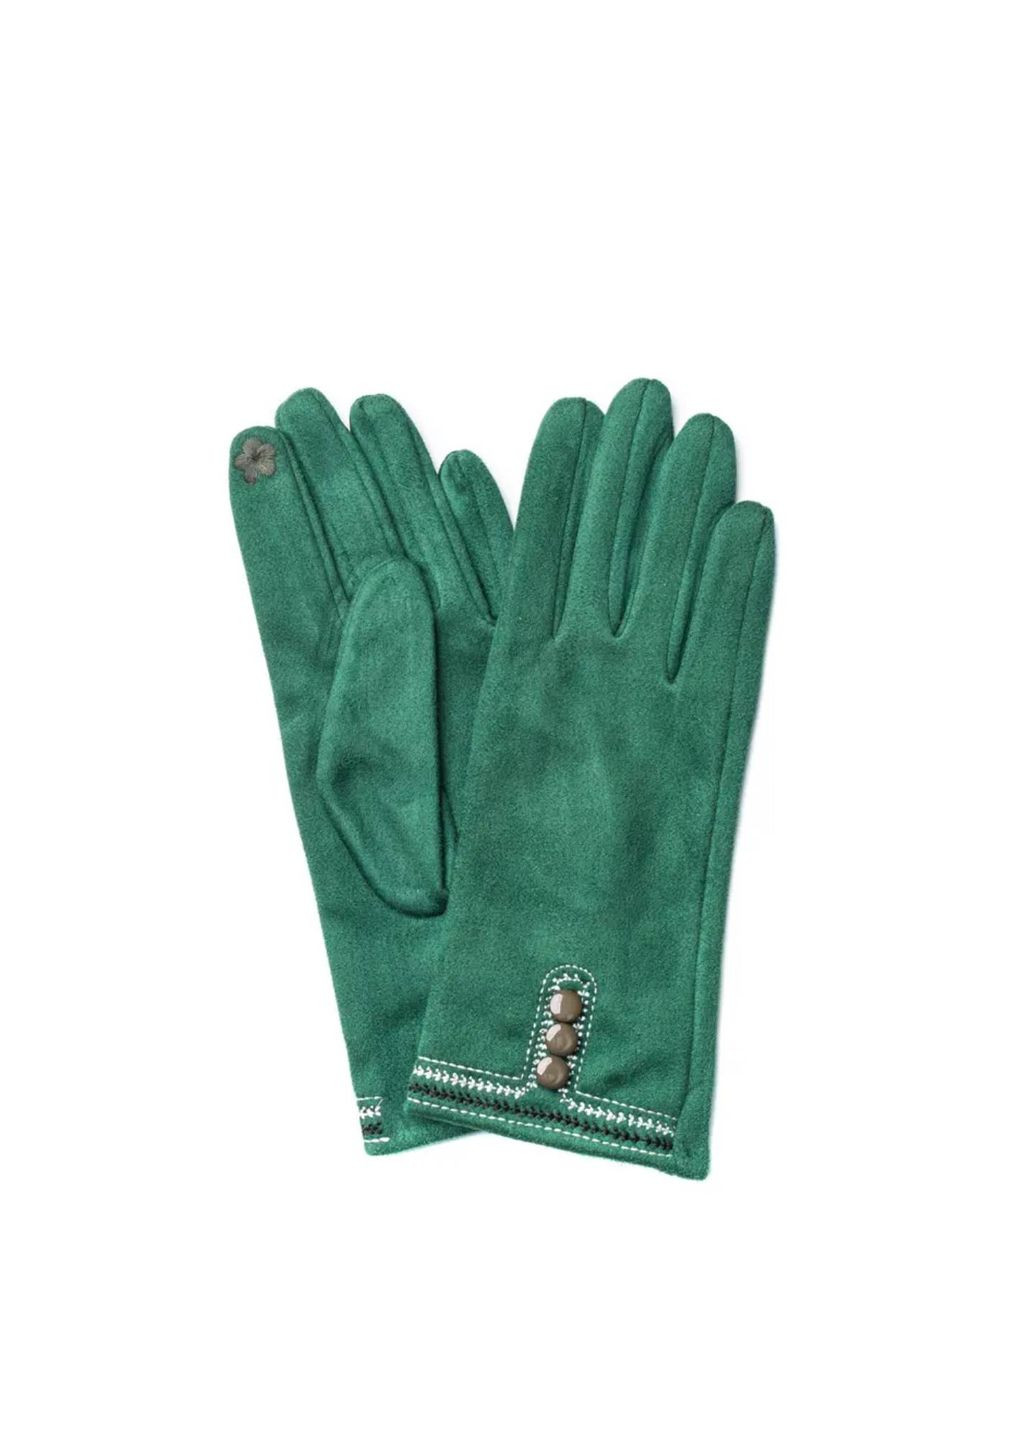 Перчатки Smart Touch женские экозамш зелные LuckyLOOK 688-569 (290278187)